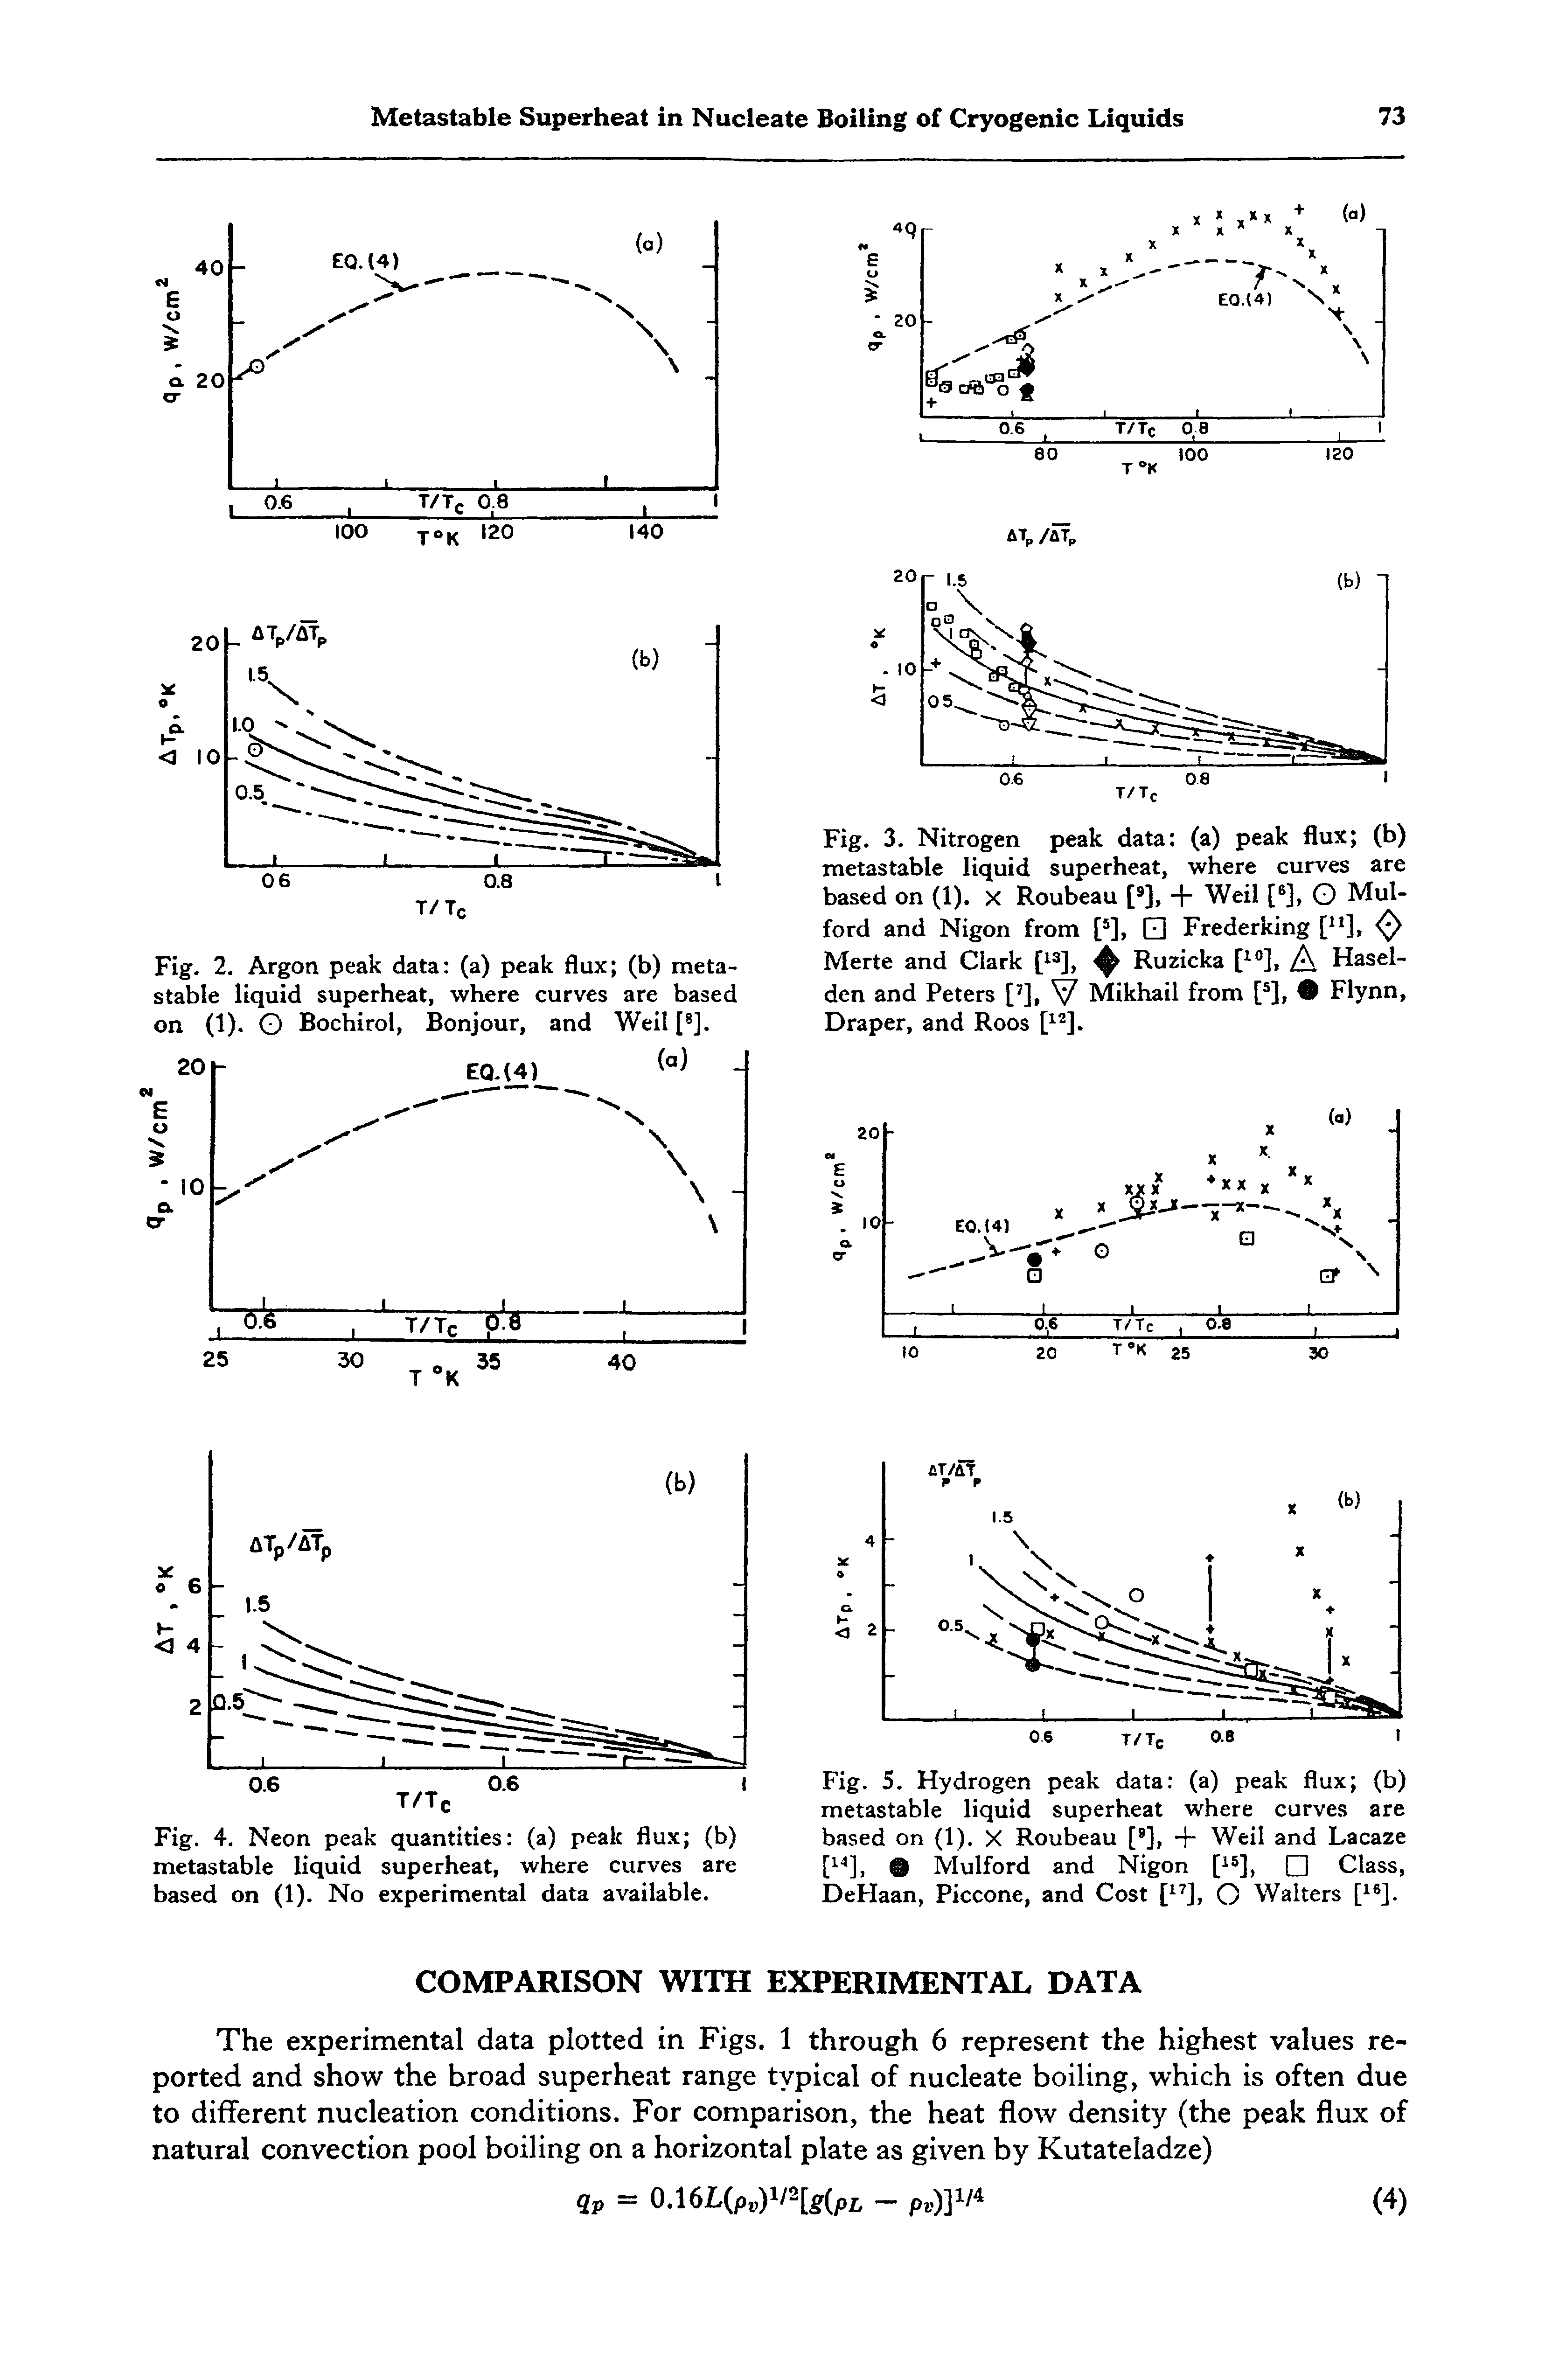 Fig. 4. Neon peak quantities (a) peak flux (b) metastable liquid superheat, where curves are based on (1). No experimental data available.